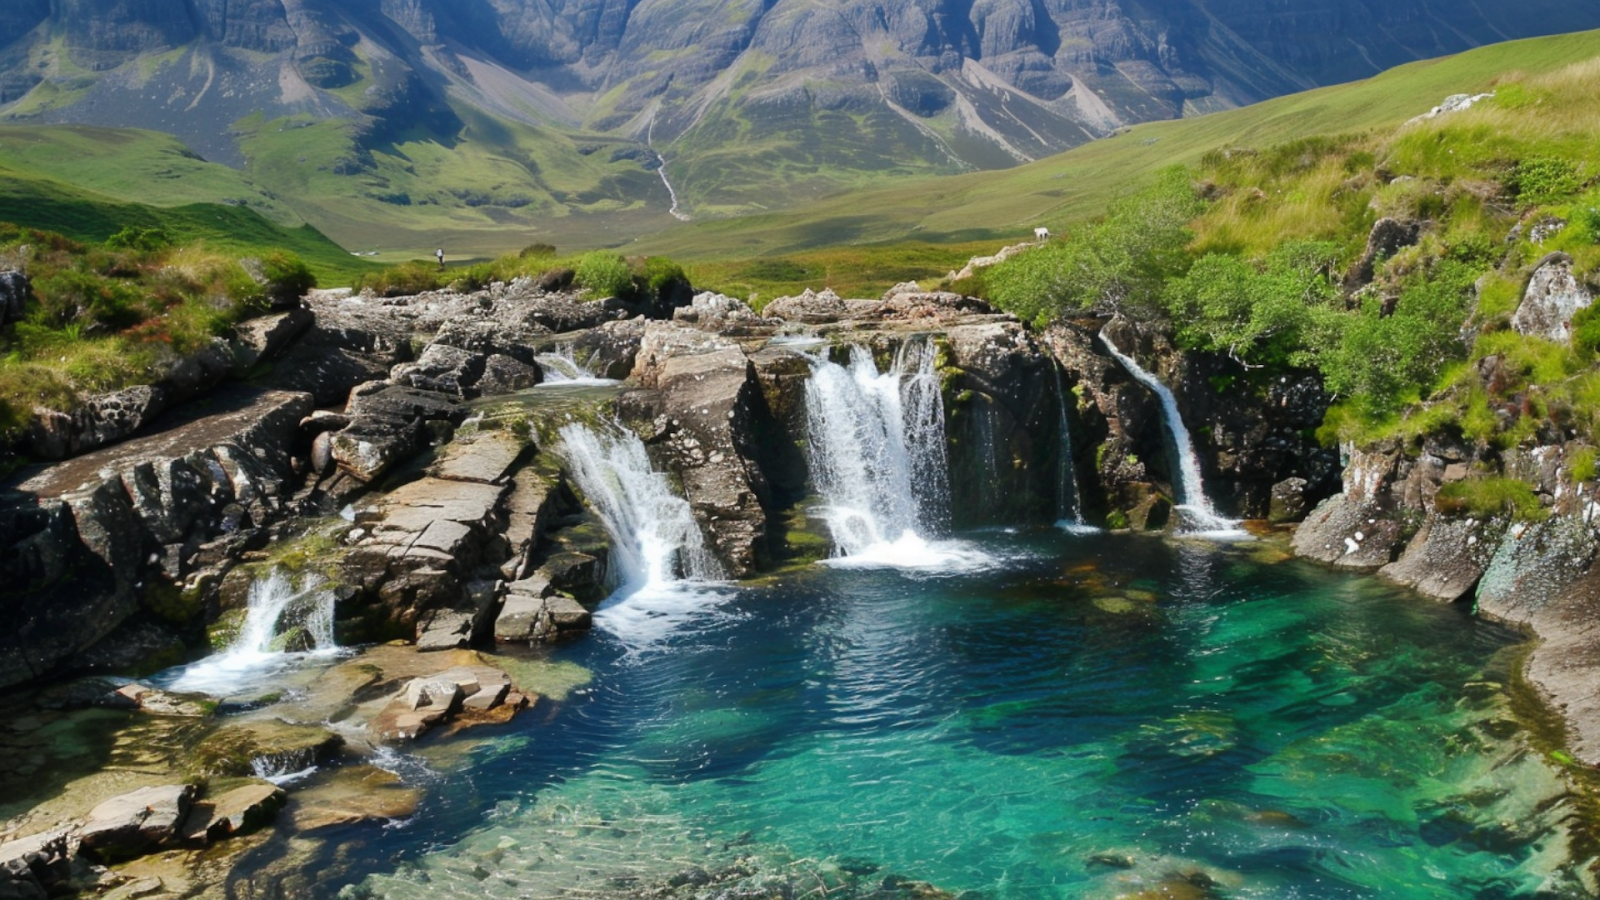 The Fairy Pools in Isle of Skye, Scotland